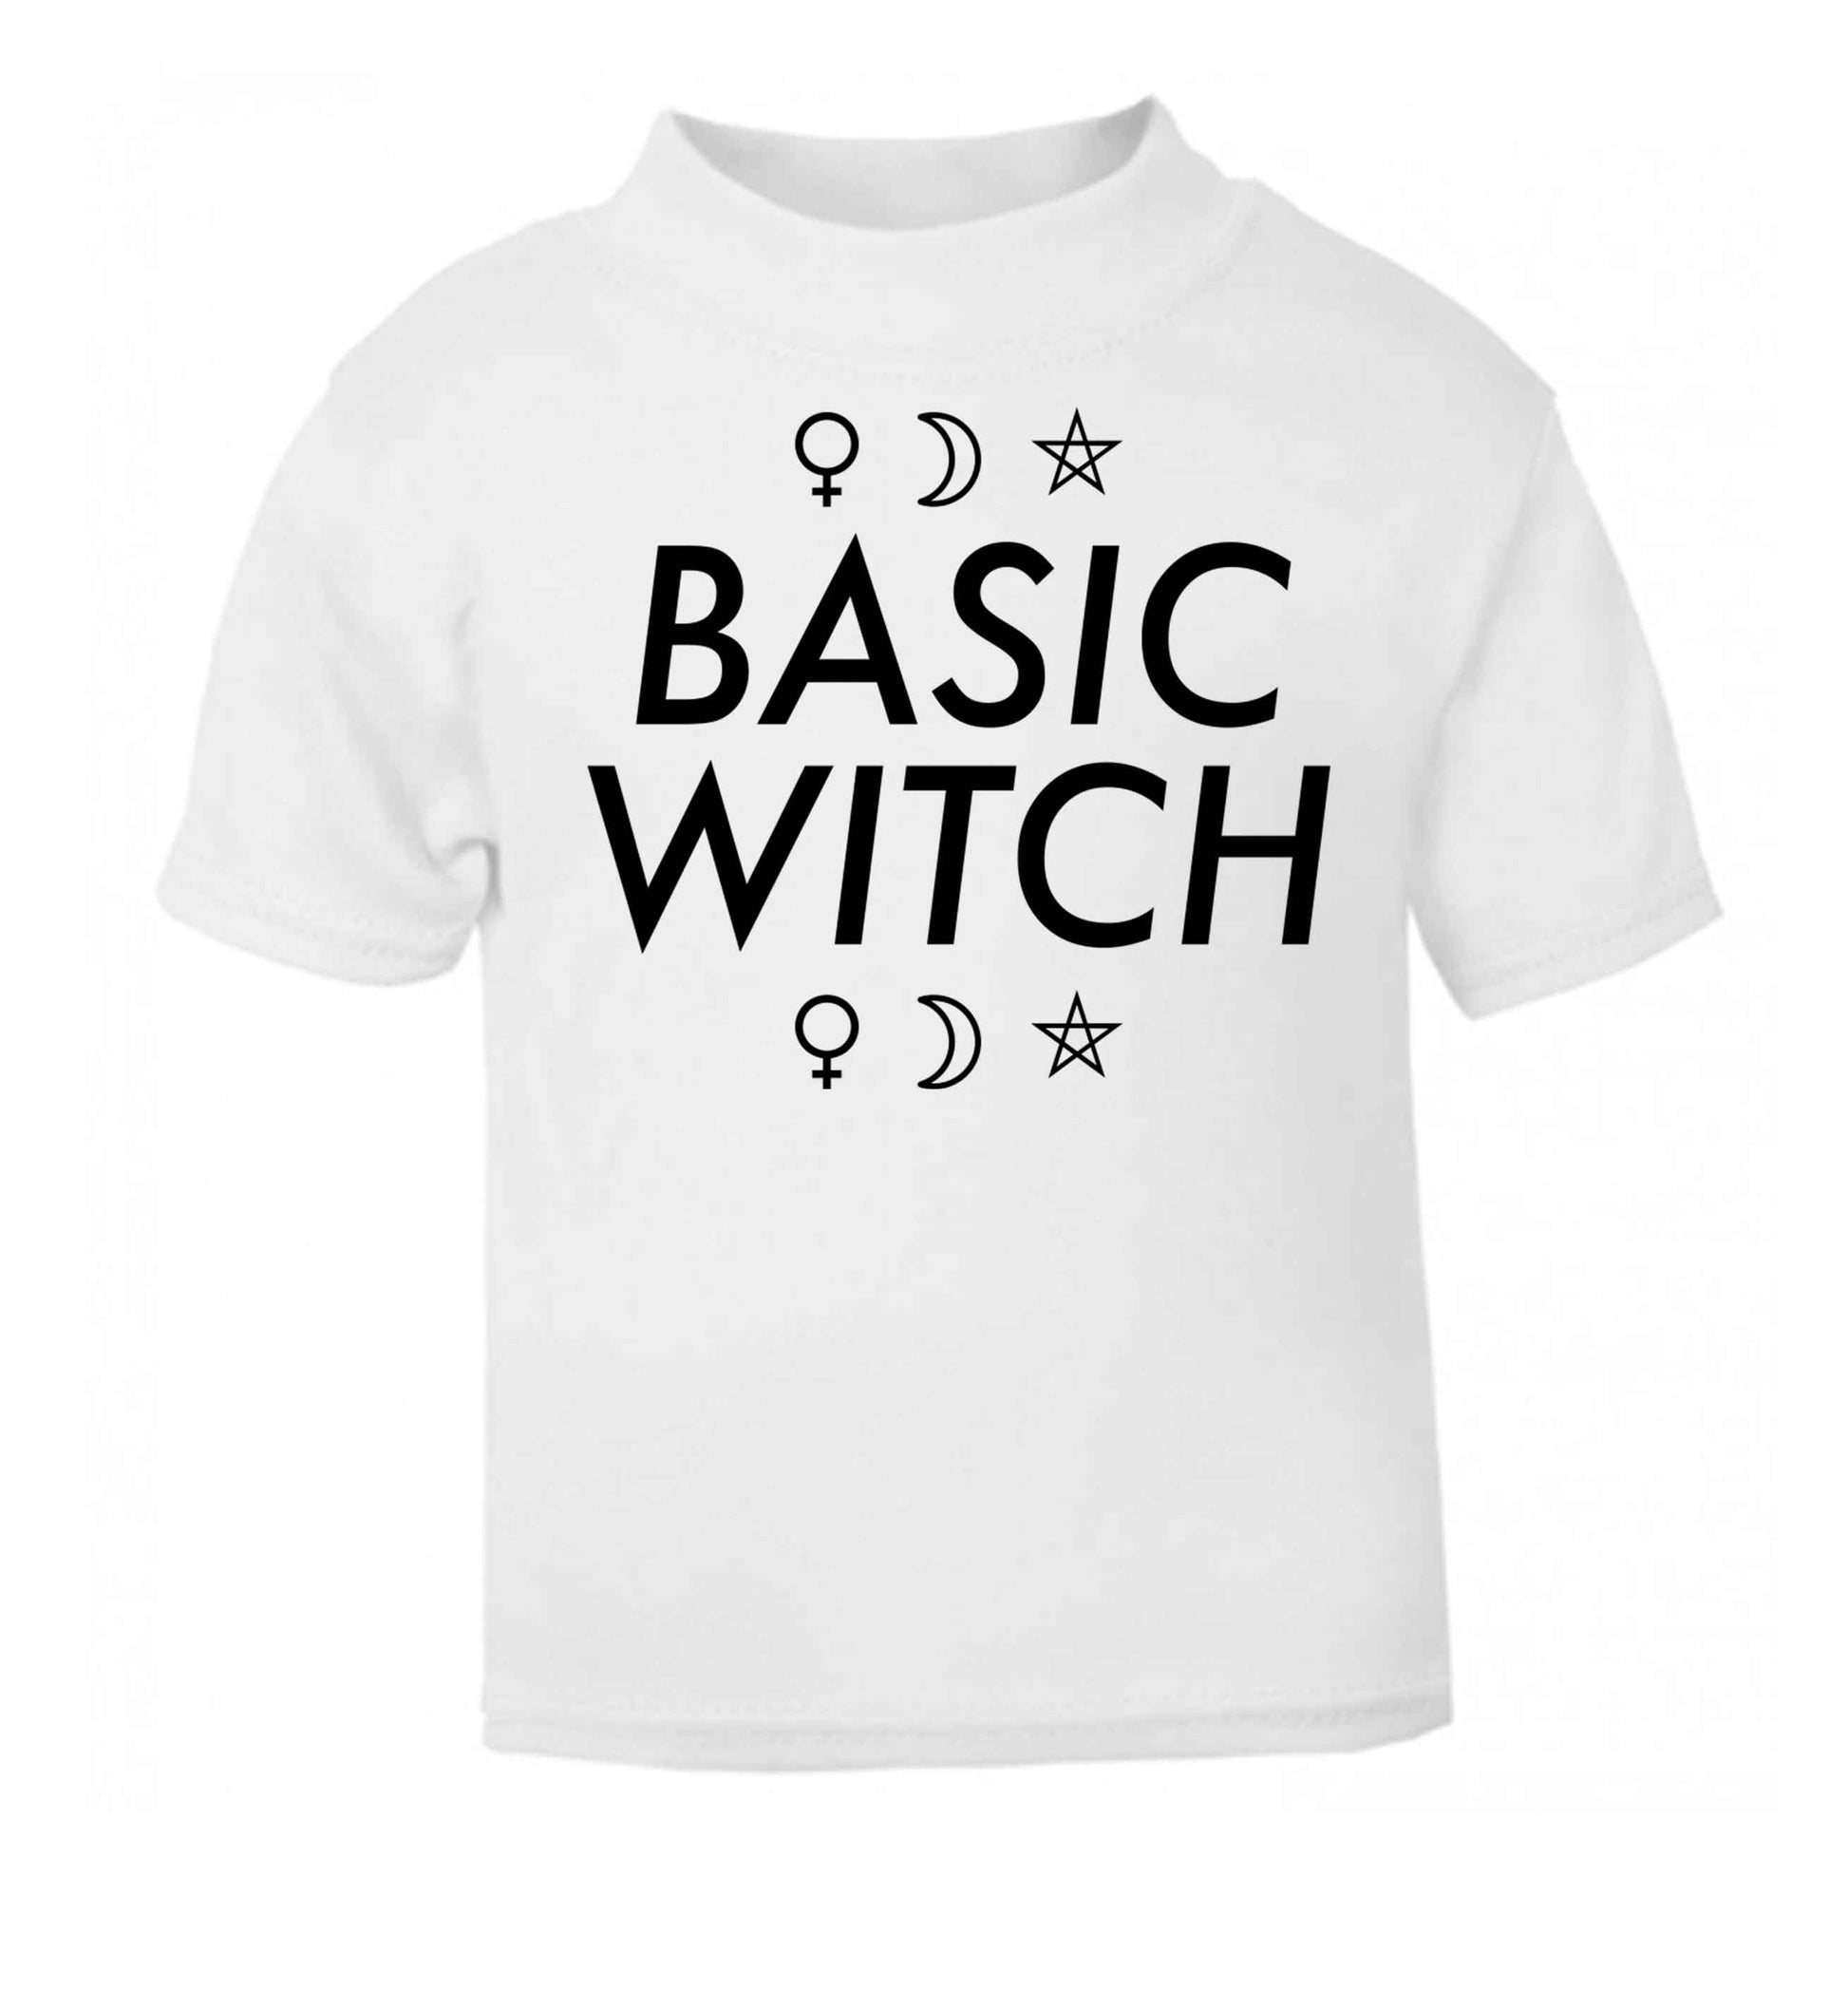 Basic witch 1 white baby toddler Tshirt 2 Years